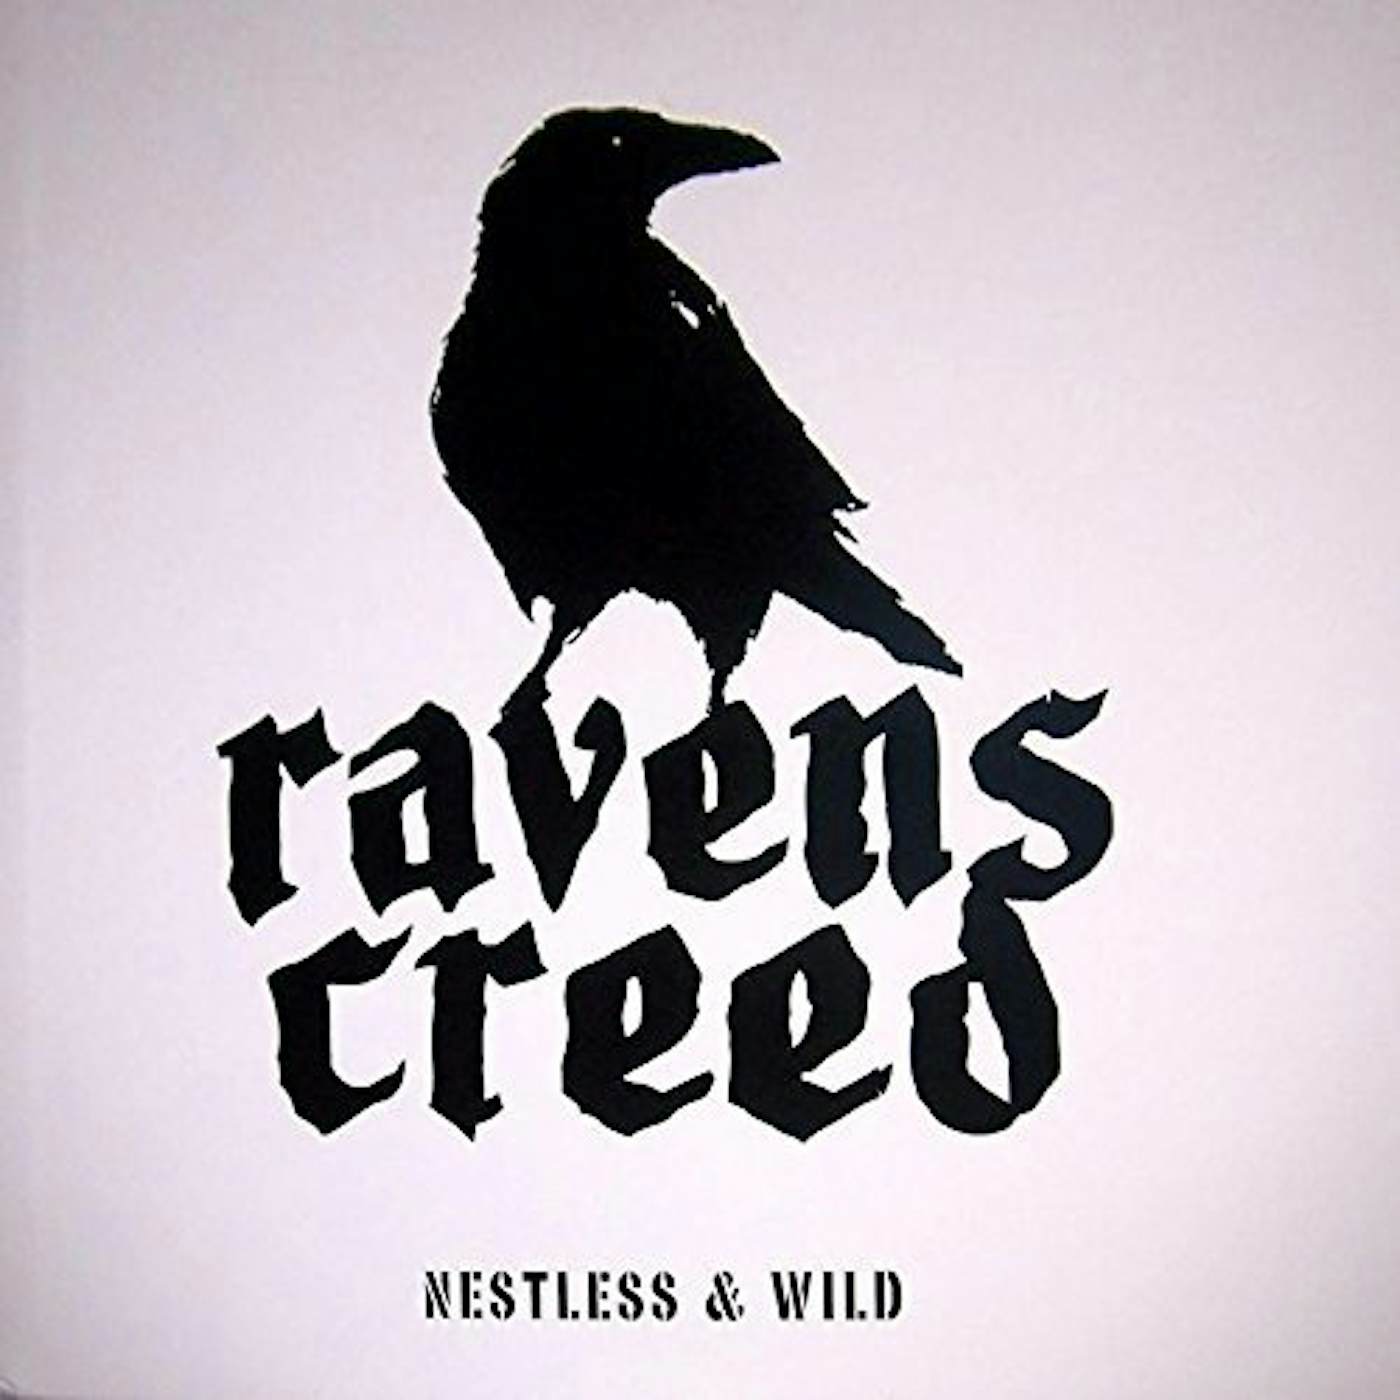 Ravens Creed NESTLESS & WILD Vinyl Record